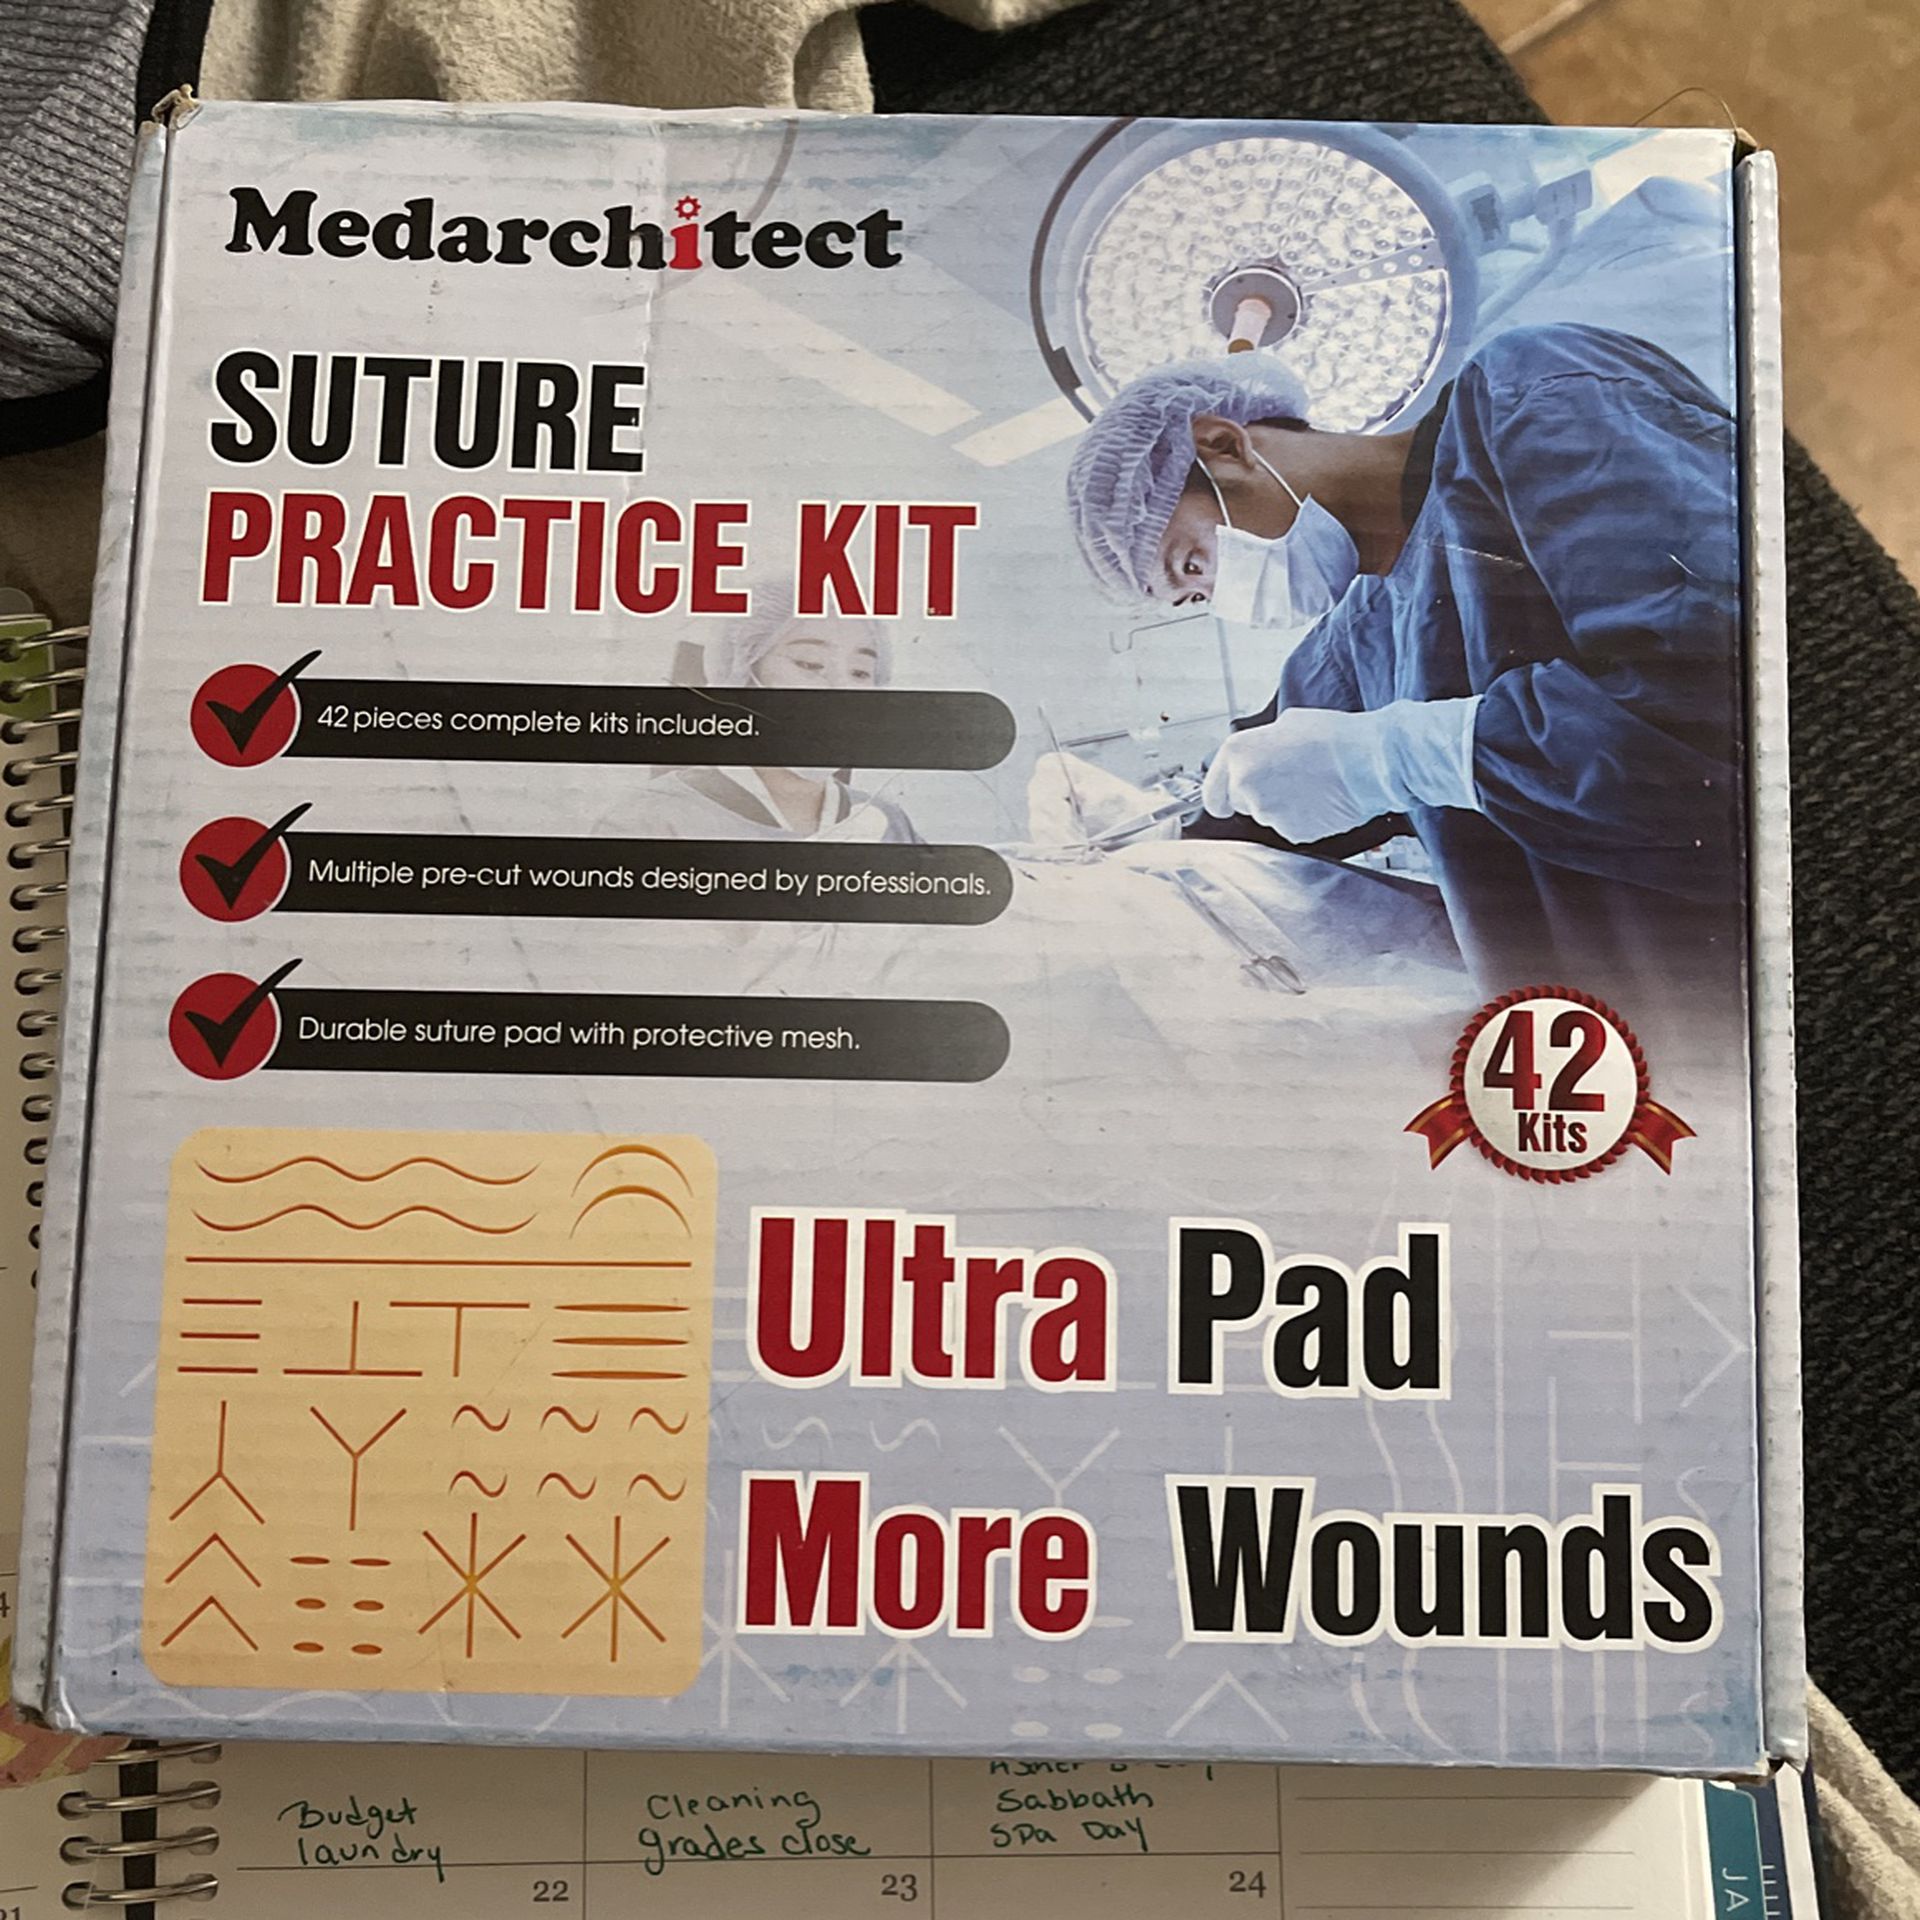 Suture practice Kit